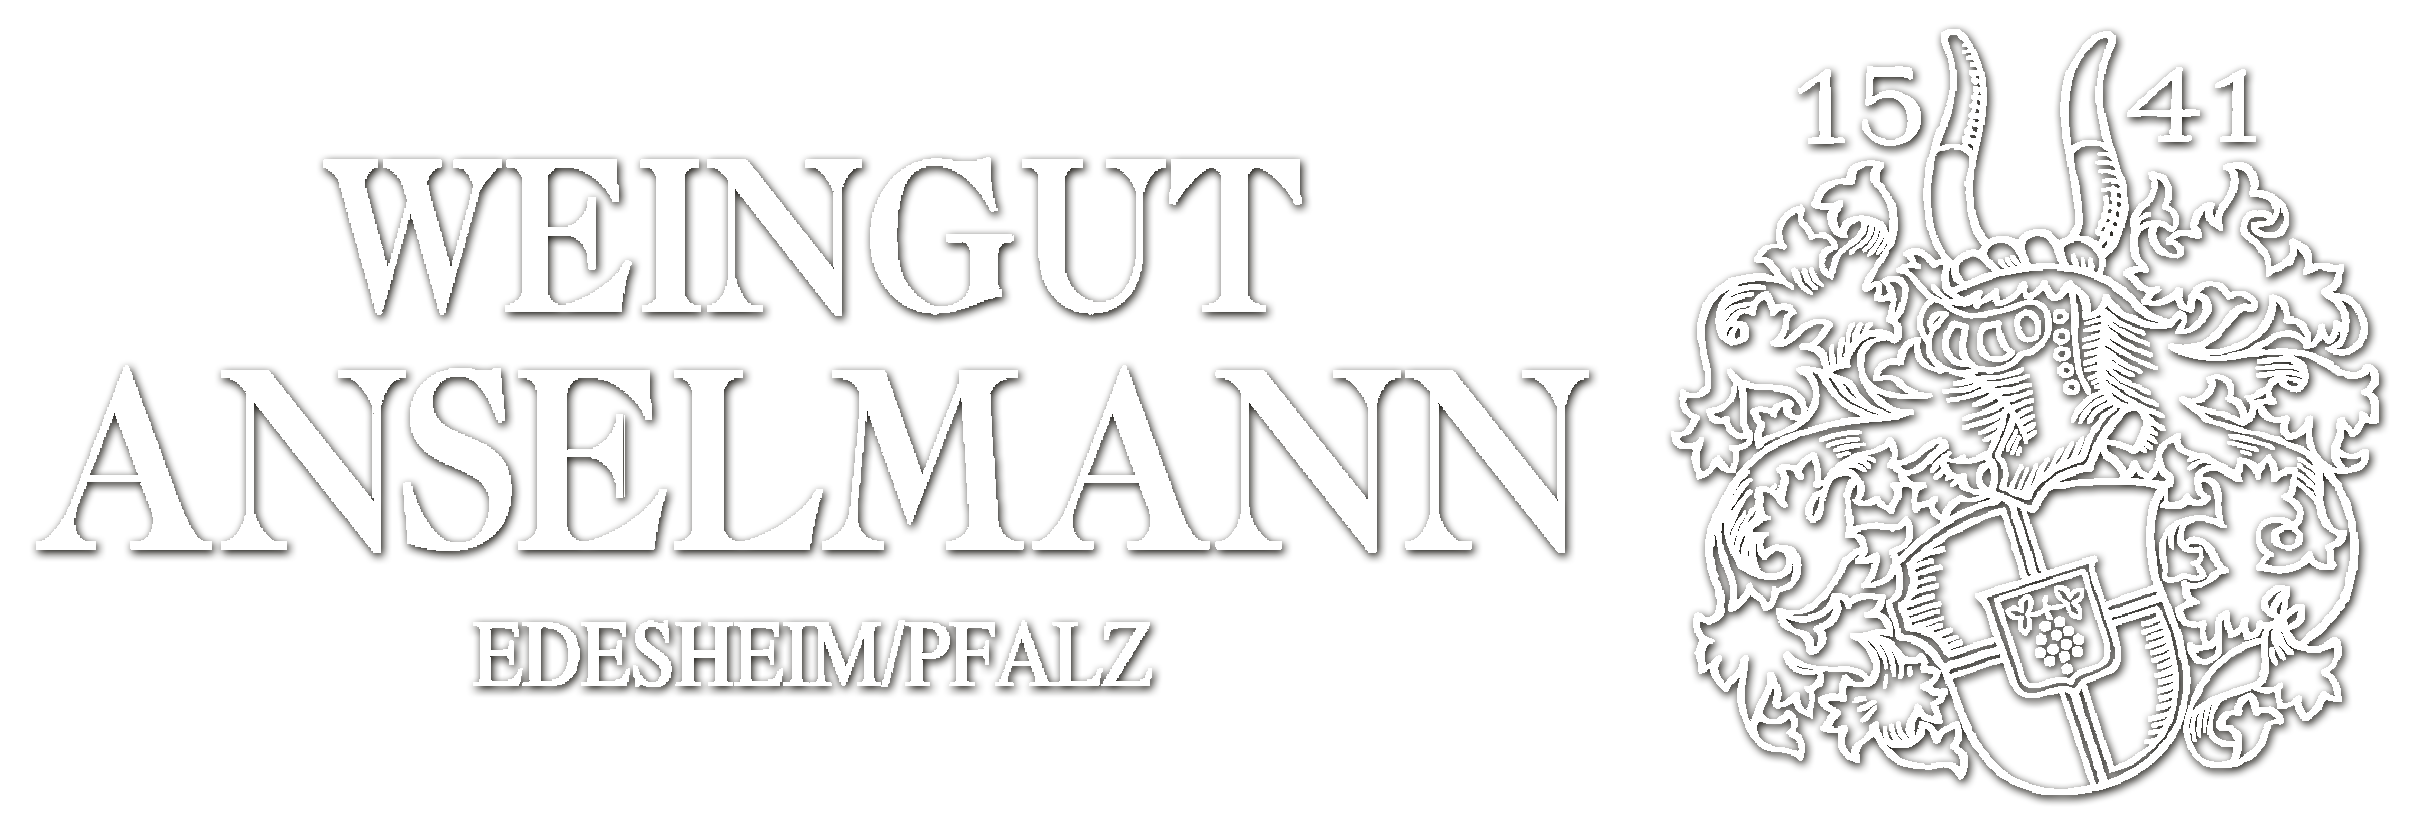 Logo Weingut Anselmann